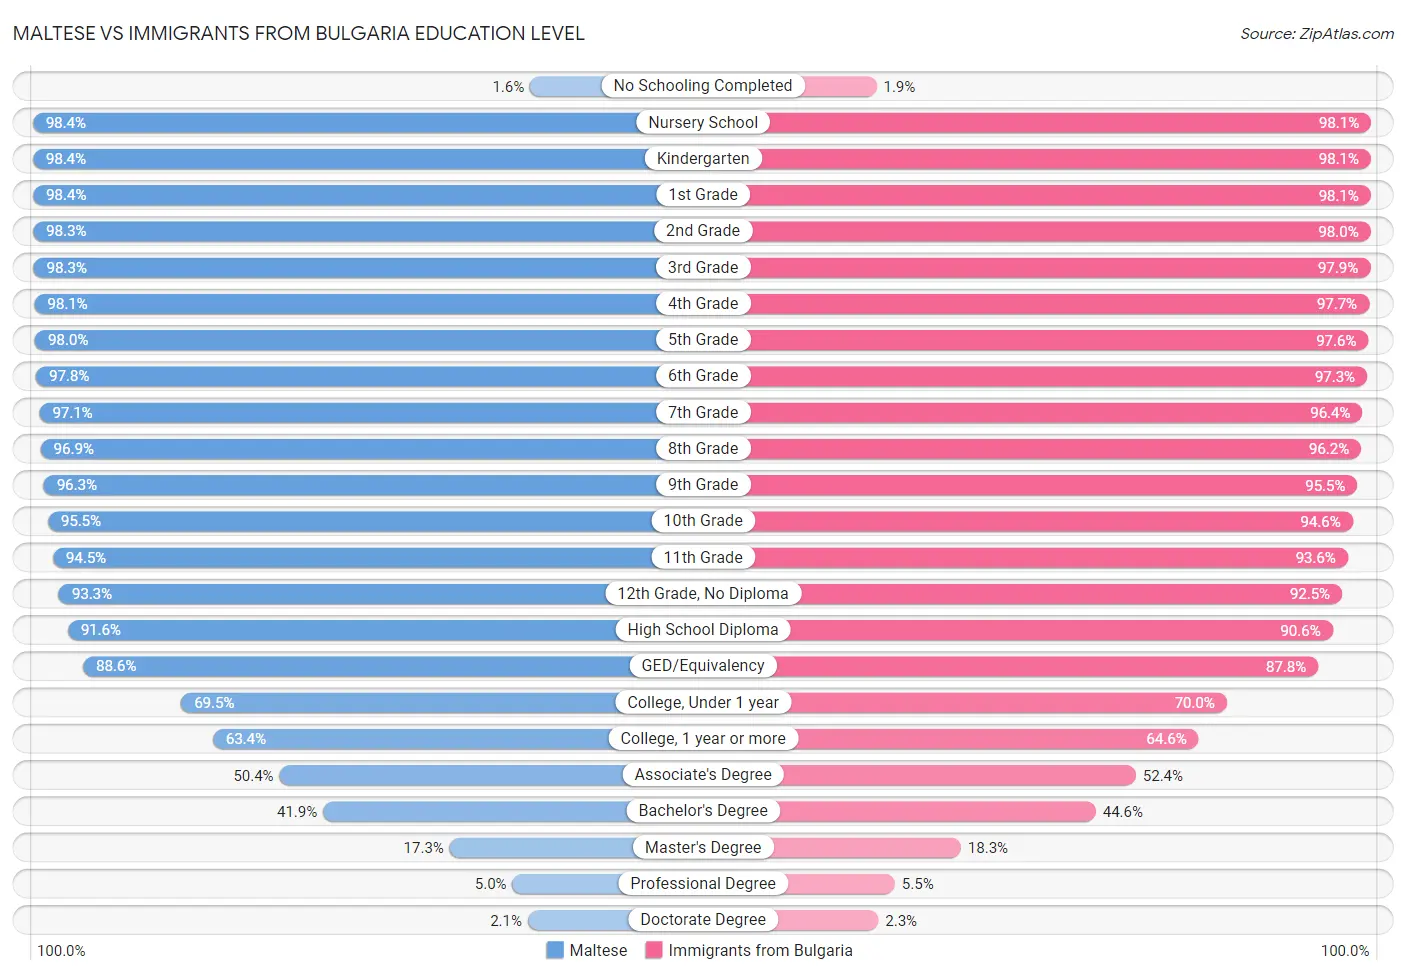 Maltese vs Immigrants from Bulgaria Education Level